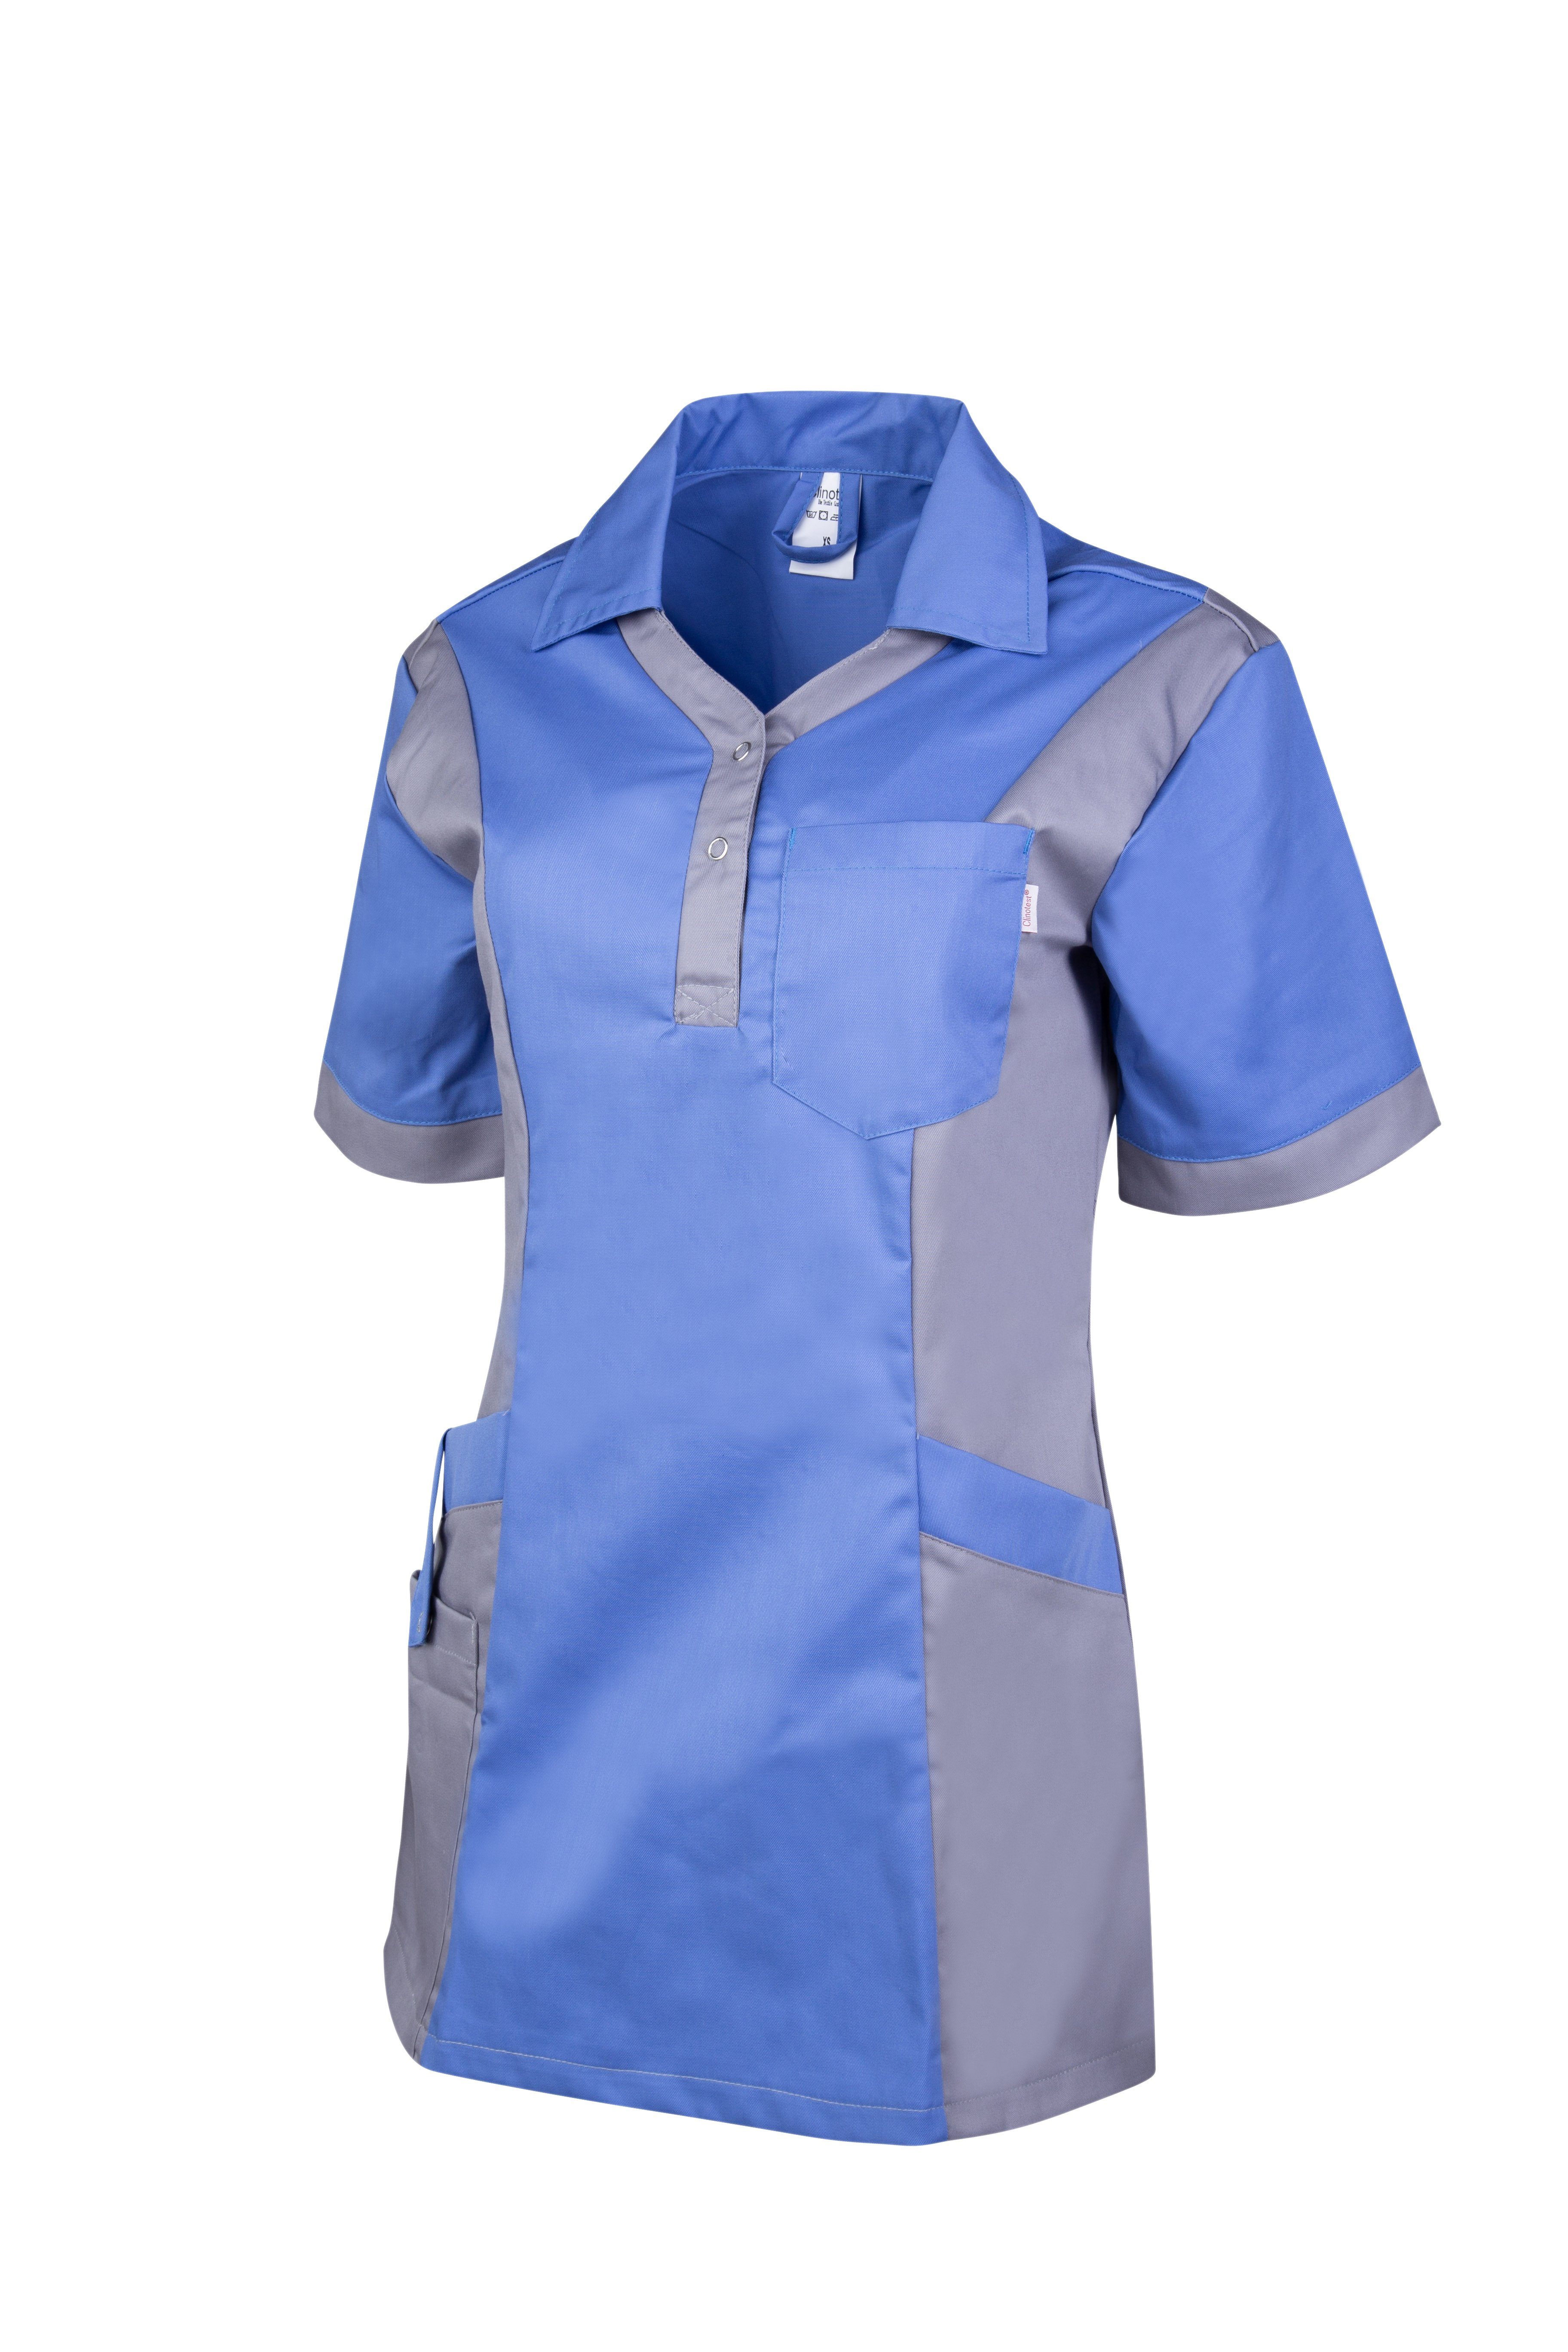 Clinotest Funktionsbluse Damenkasack "Julia", Schlupfkasack/Pflegekasack, verschiedene Farben Metro Blue/ Hospital Grey